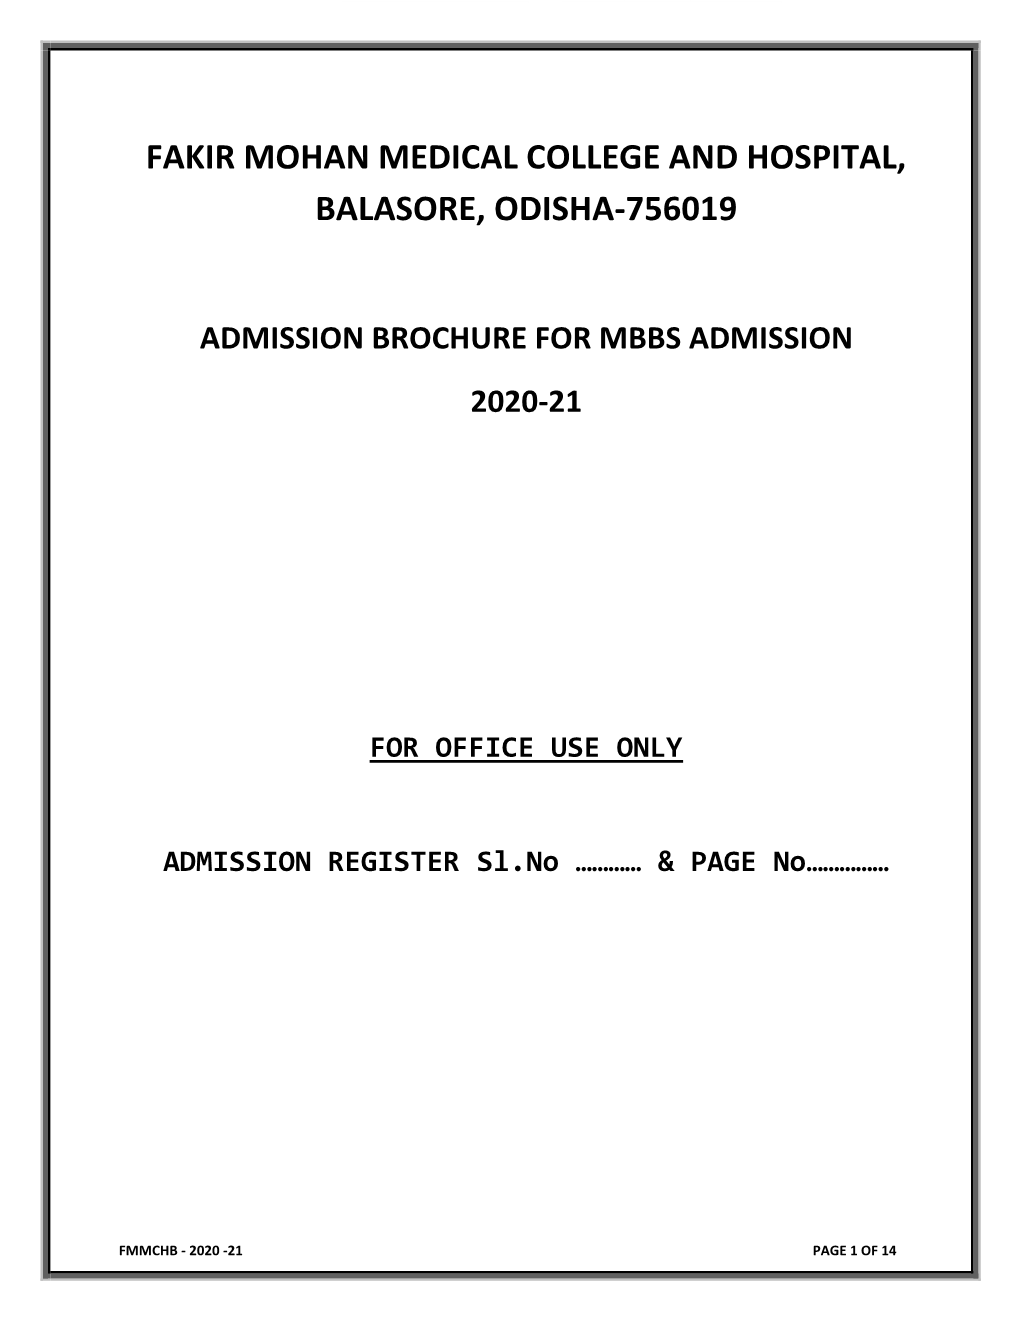 Fakir Mohan Medical College and Hospital, Balasore, Odisha-756019